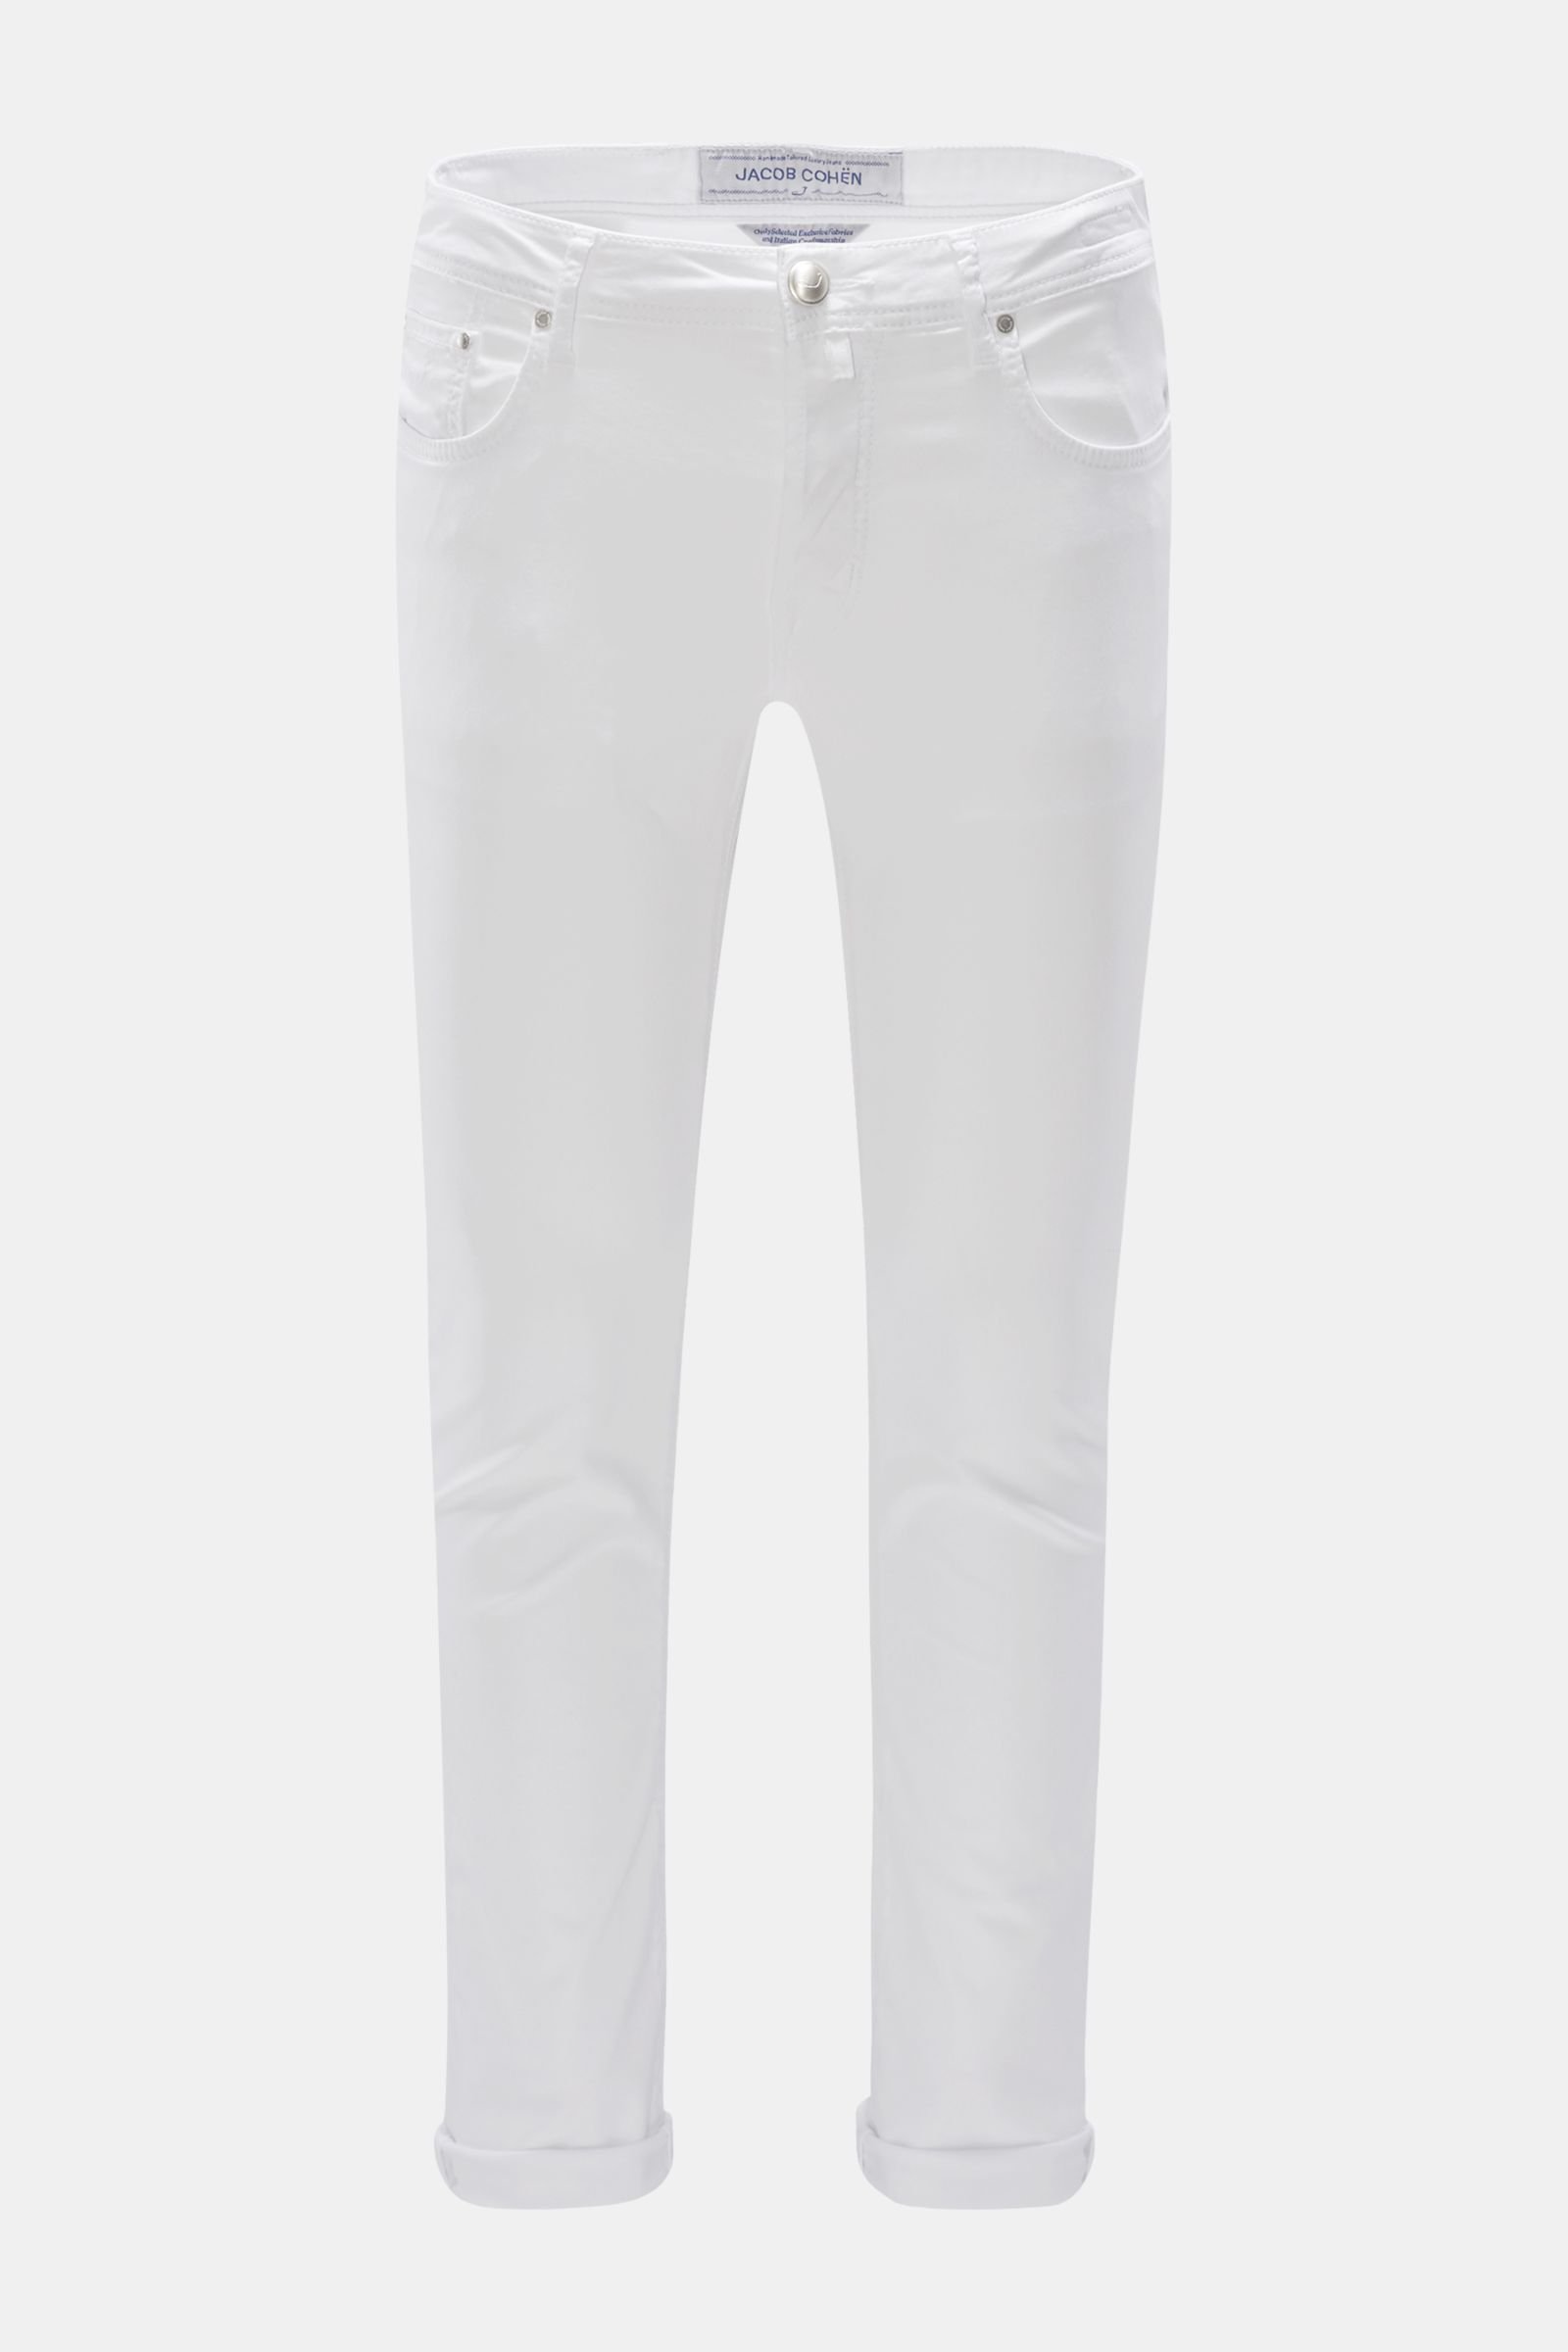 Trousers 'J688 Comfort Slim Fit' white